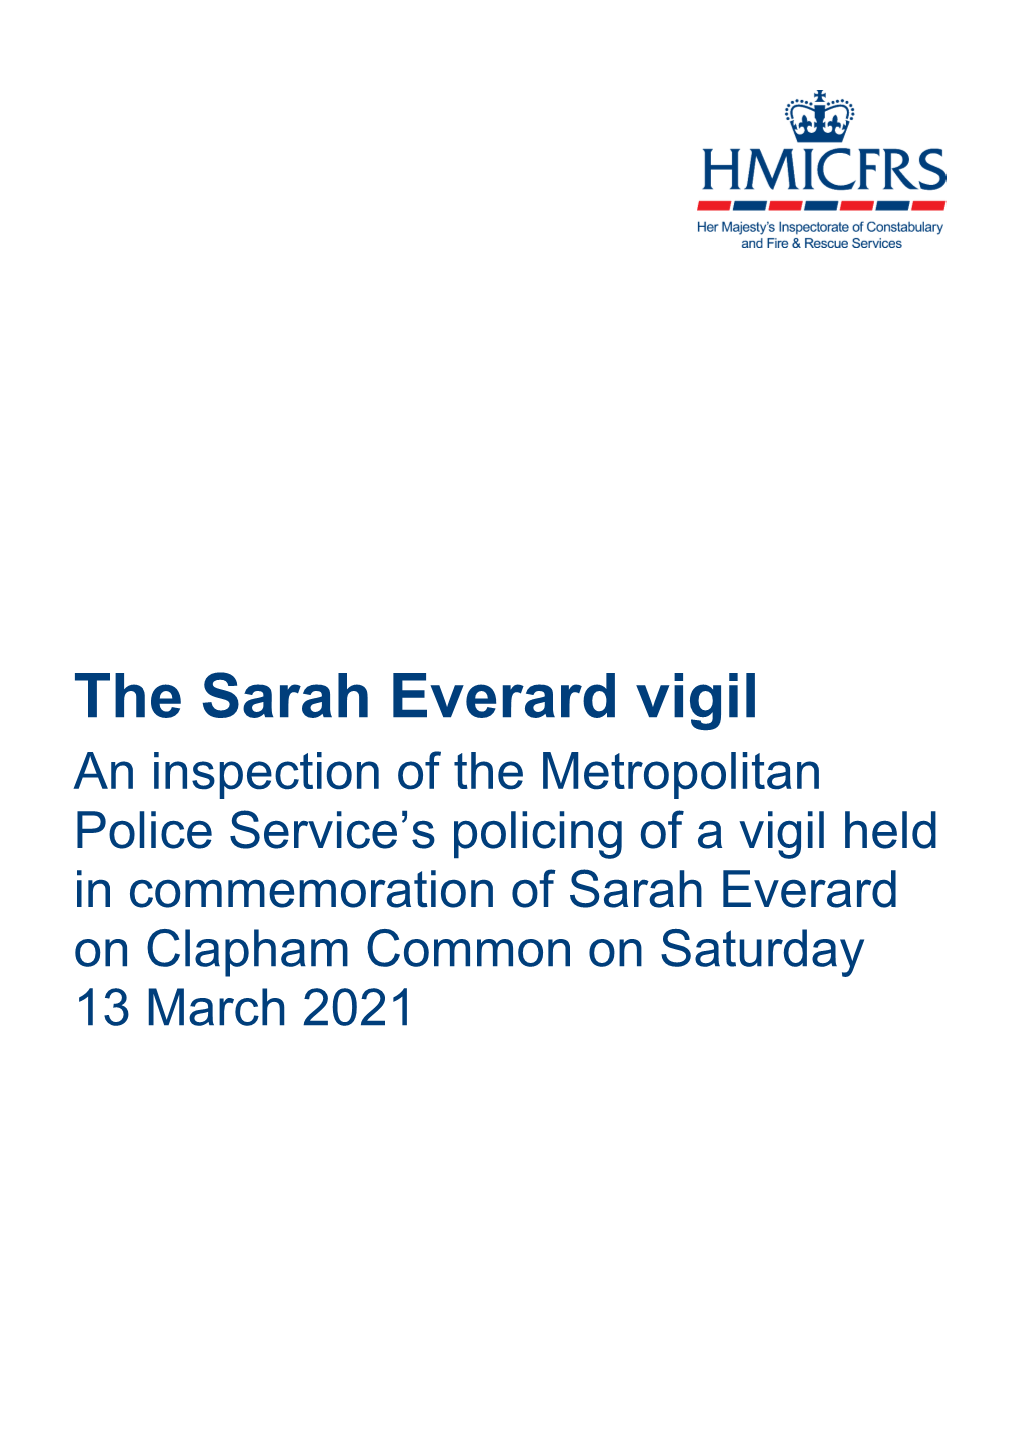 The Sarah Everard Vigil